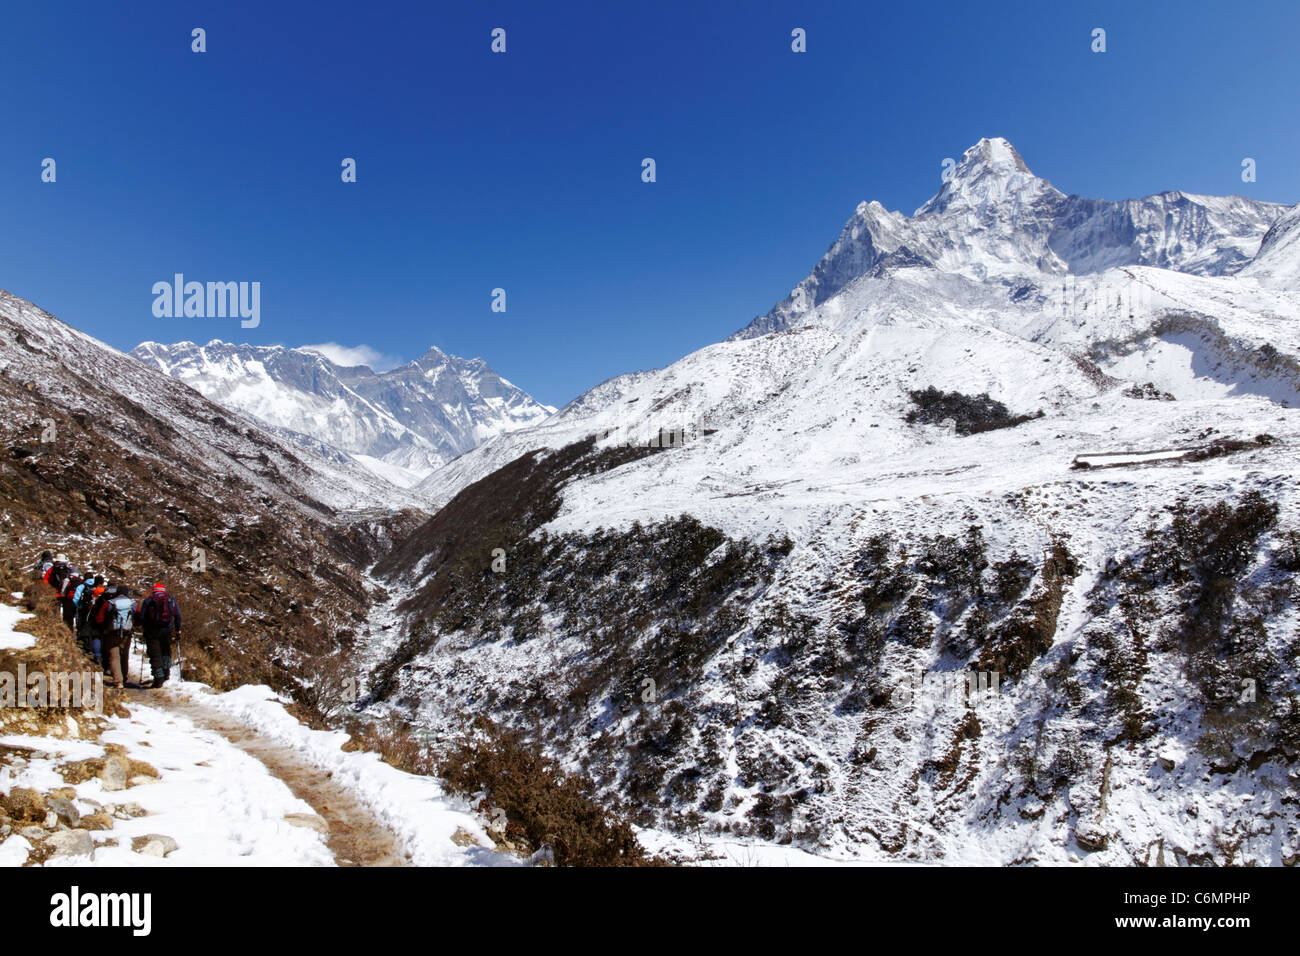 Trekkers walking towards Everest with Ama Dablam mountain on the right, Everest Region, Nepal Stock Photo